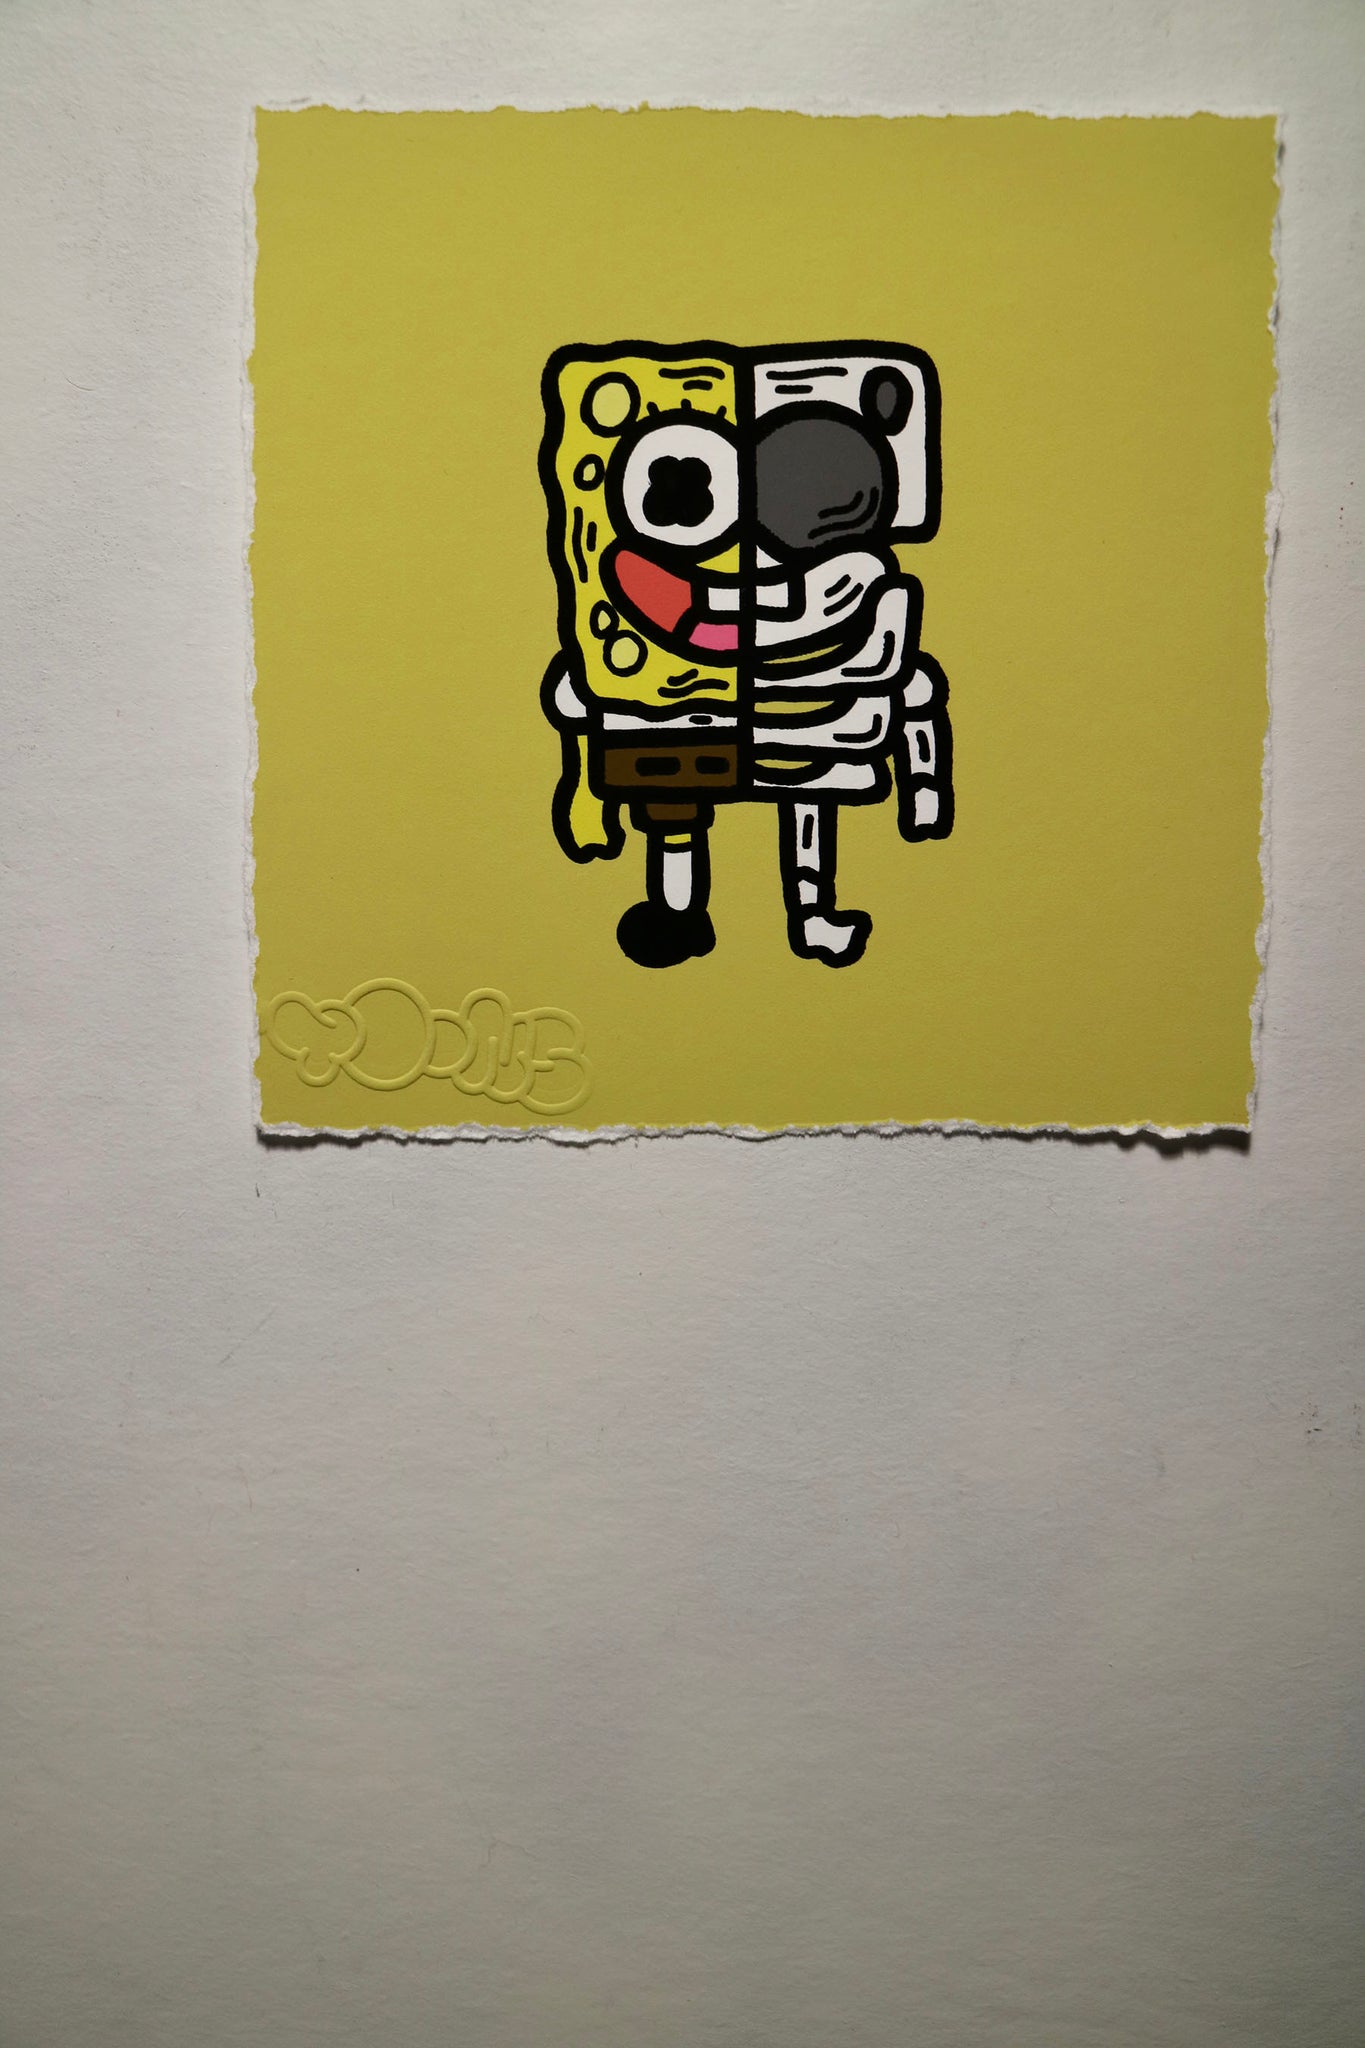 Skeleton Spongebob (6 x 6) Giclee Art Print